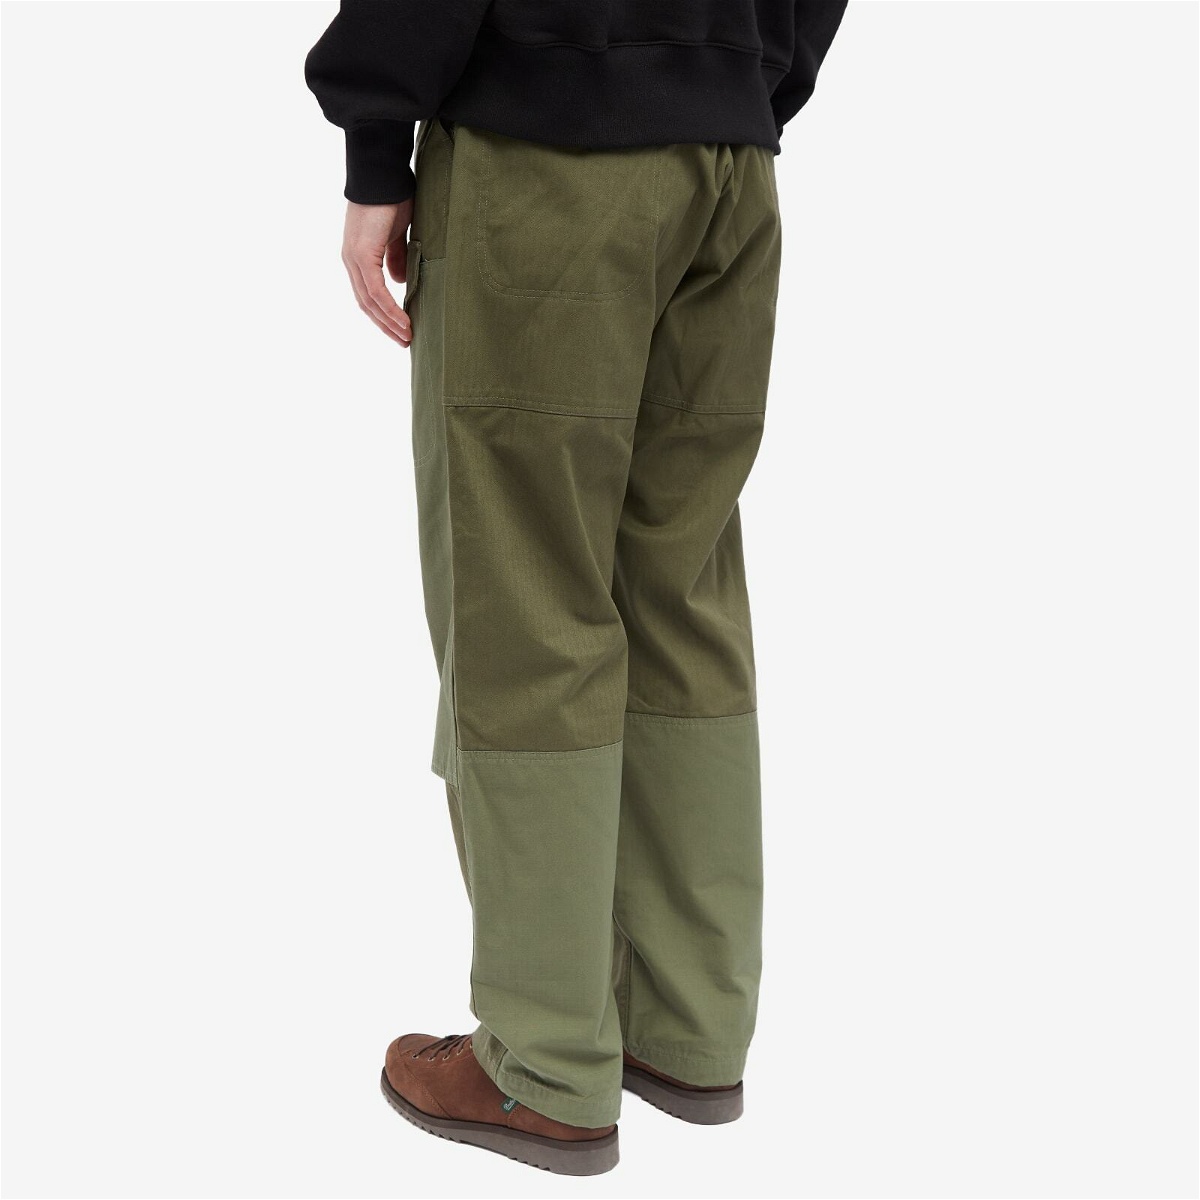 Engineered Garments Men's Field Pant in Olive Herringbone Twill